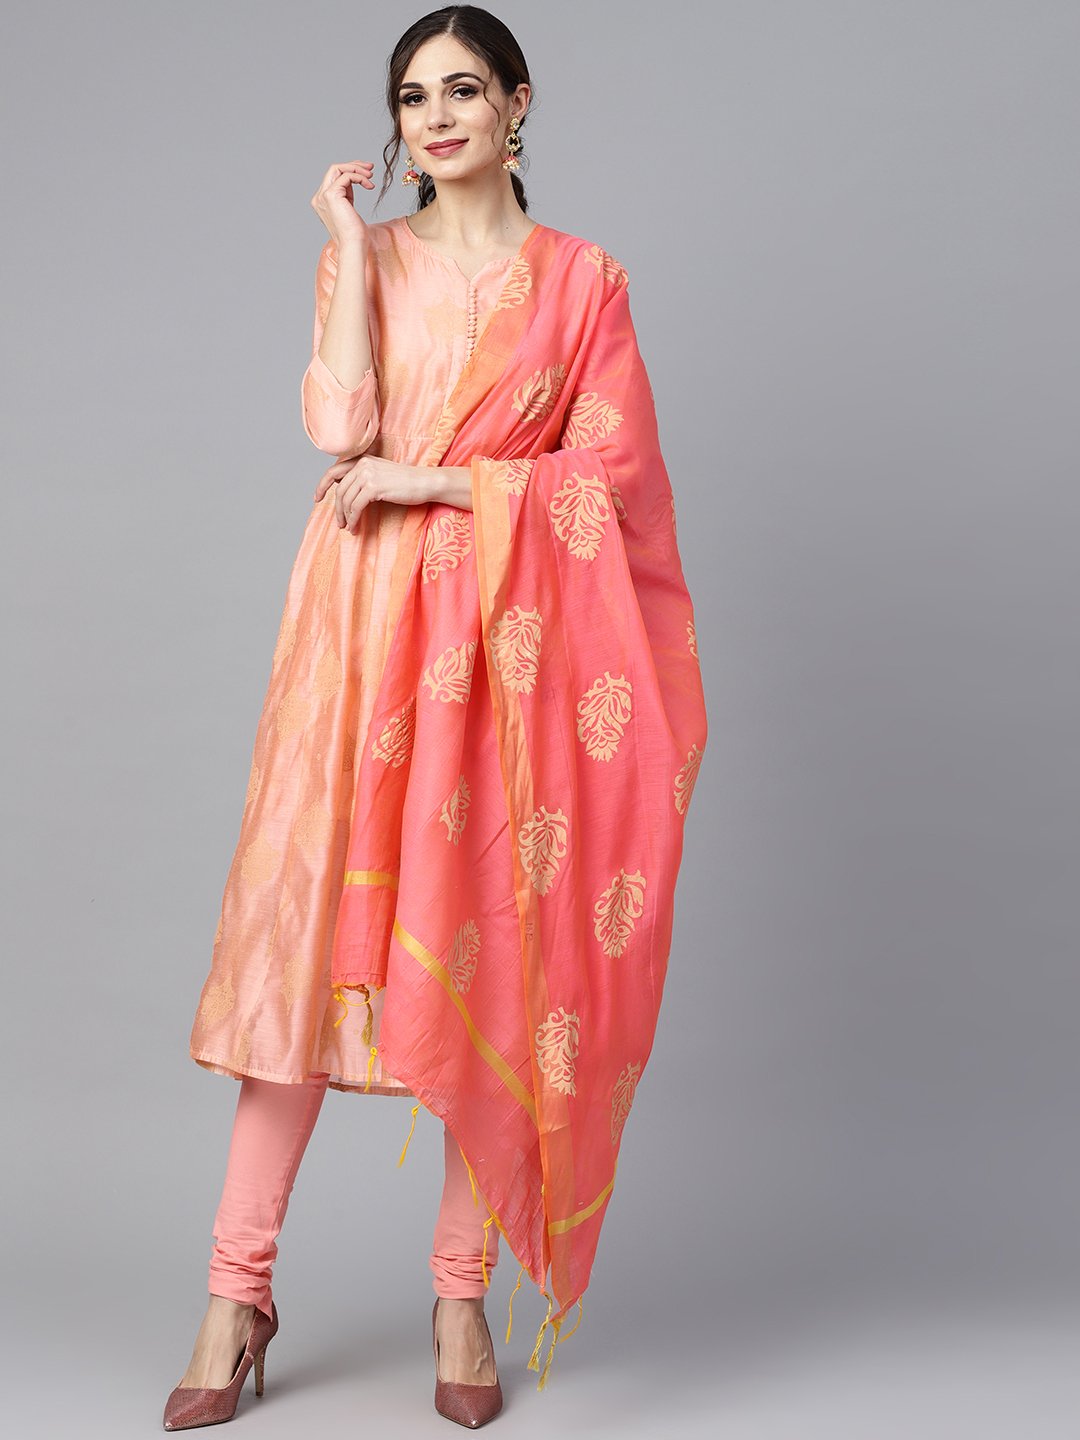 Women's Peach Two-Toned Gold Khadi Chanderi Anarkali With Solid Light Pink Churidar And Printed Chanderi Dupatta - Nayo Clothing